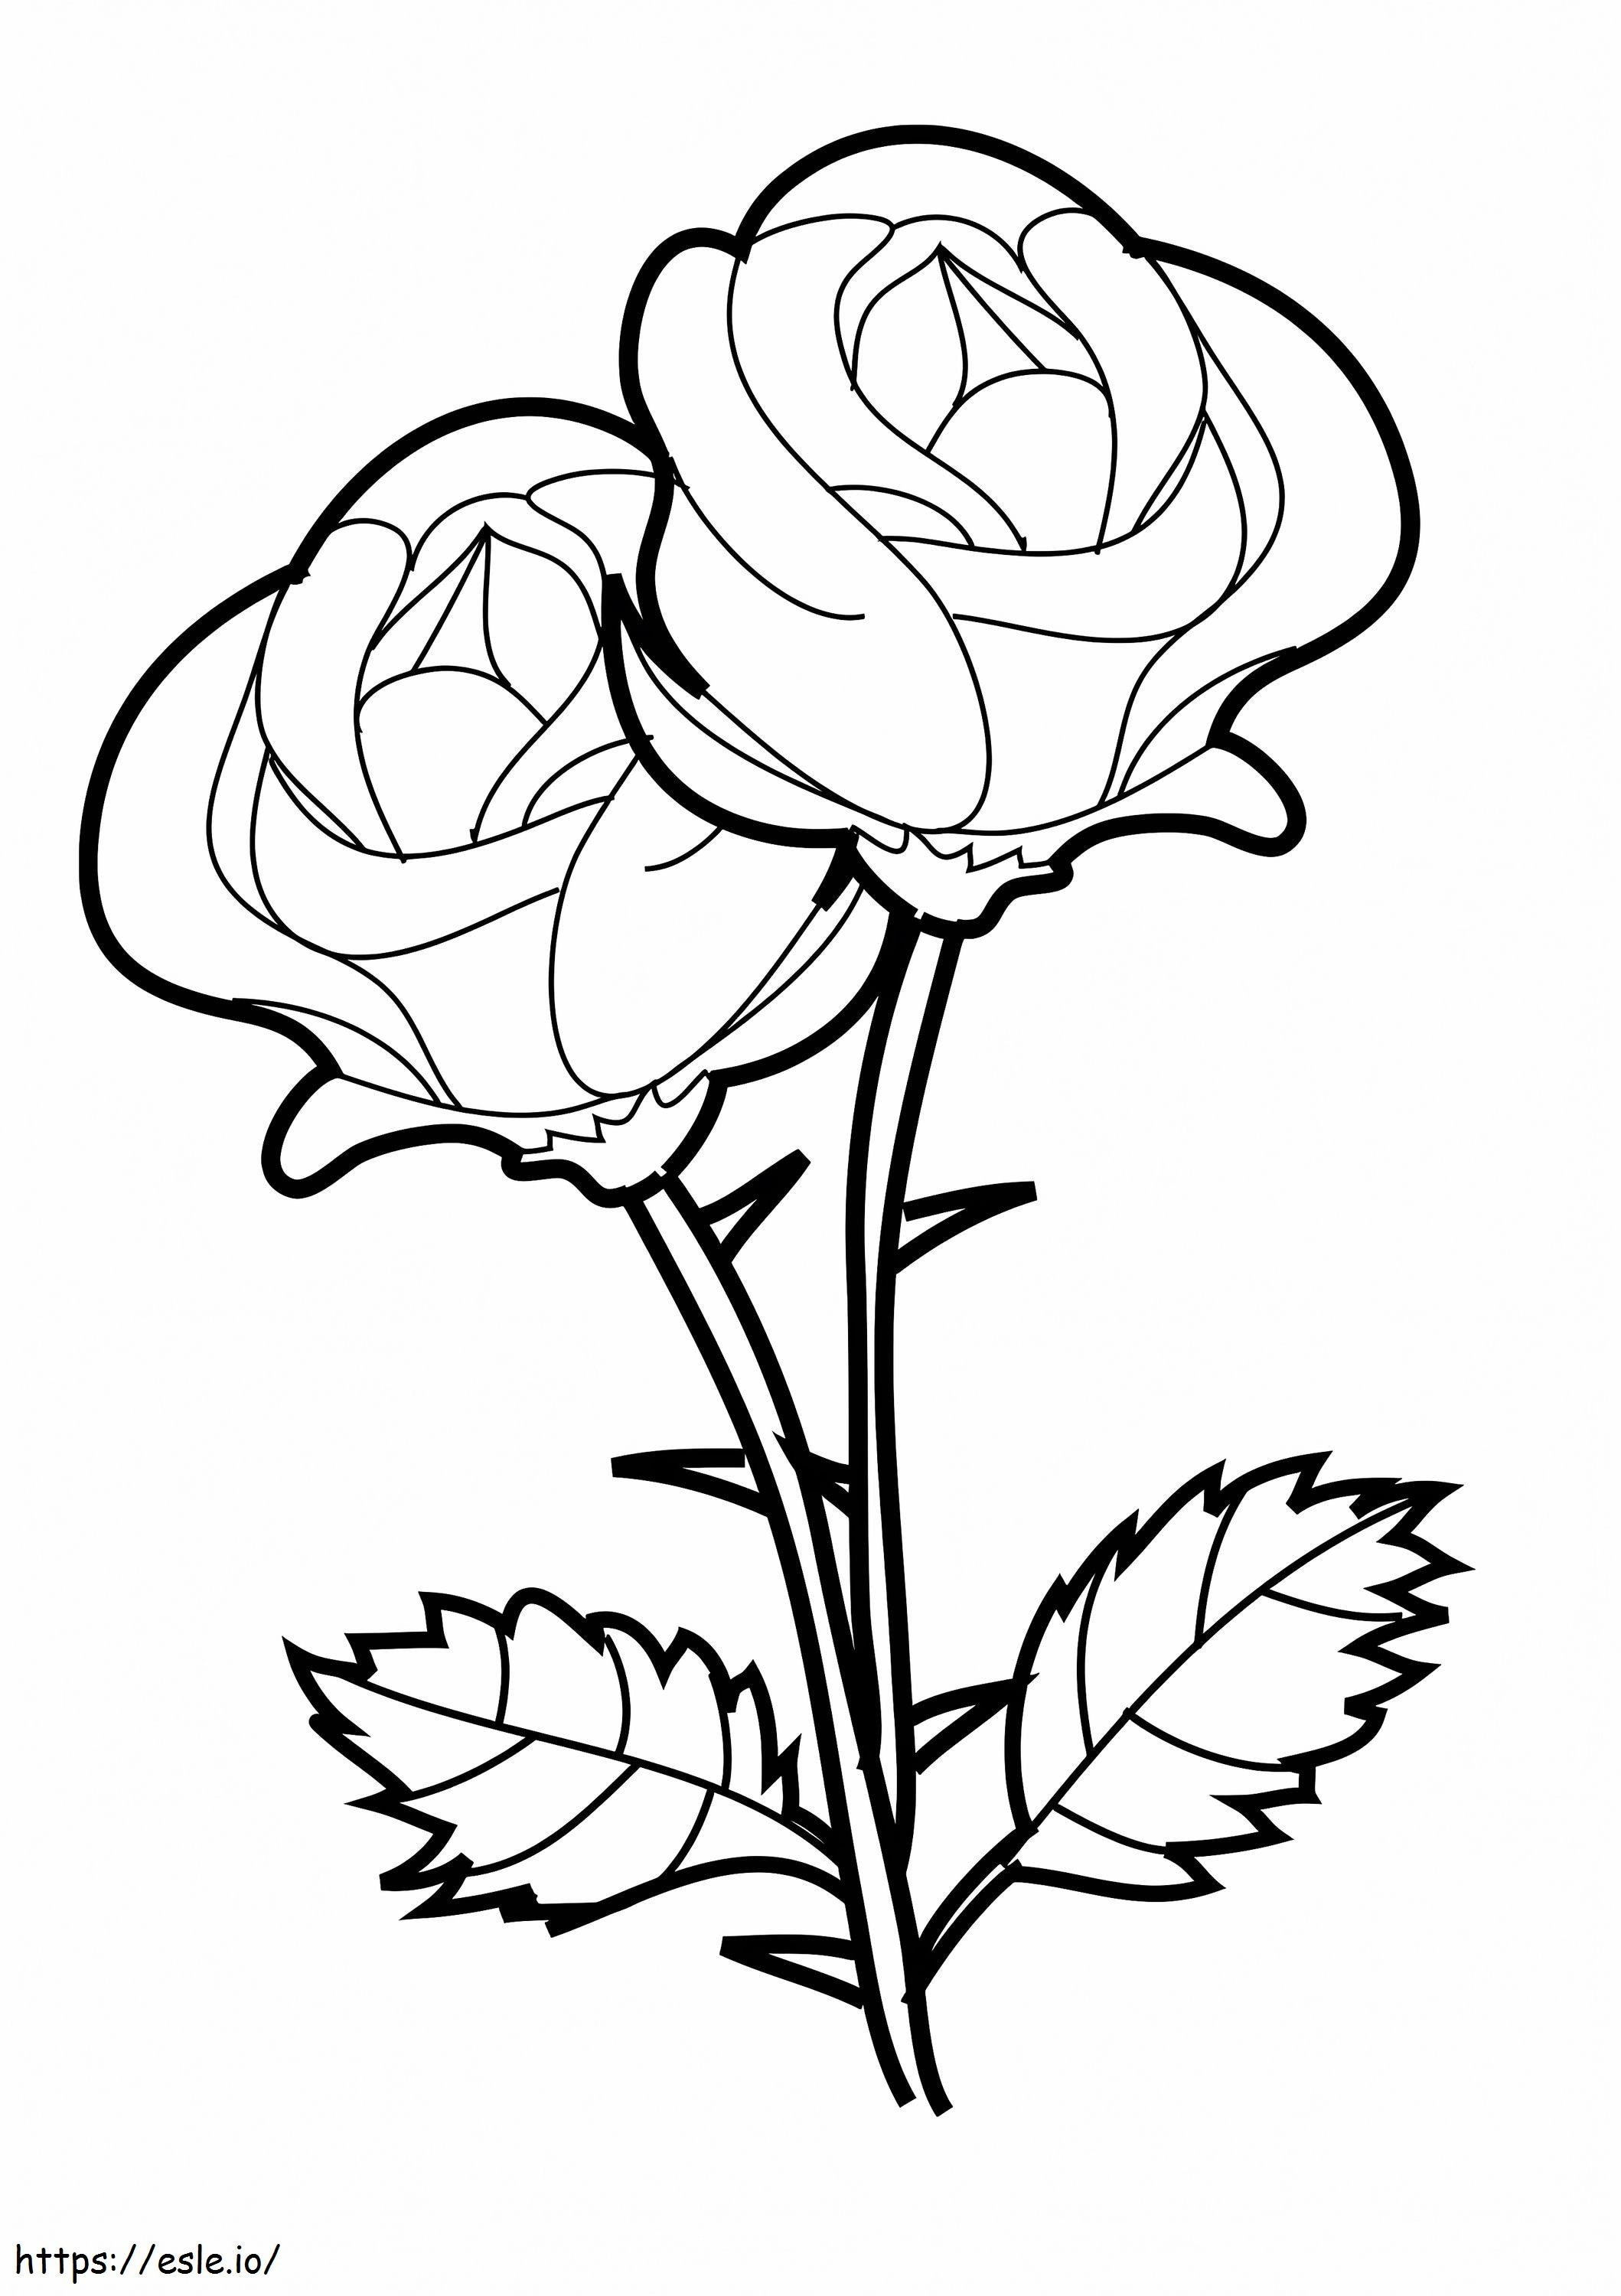  Rosa Imprimible 11 para colorear